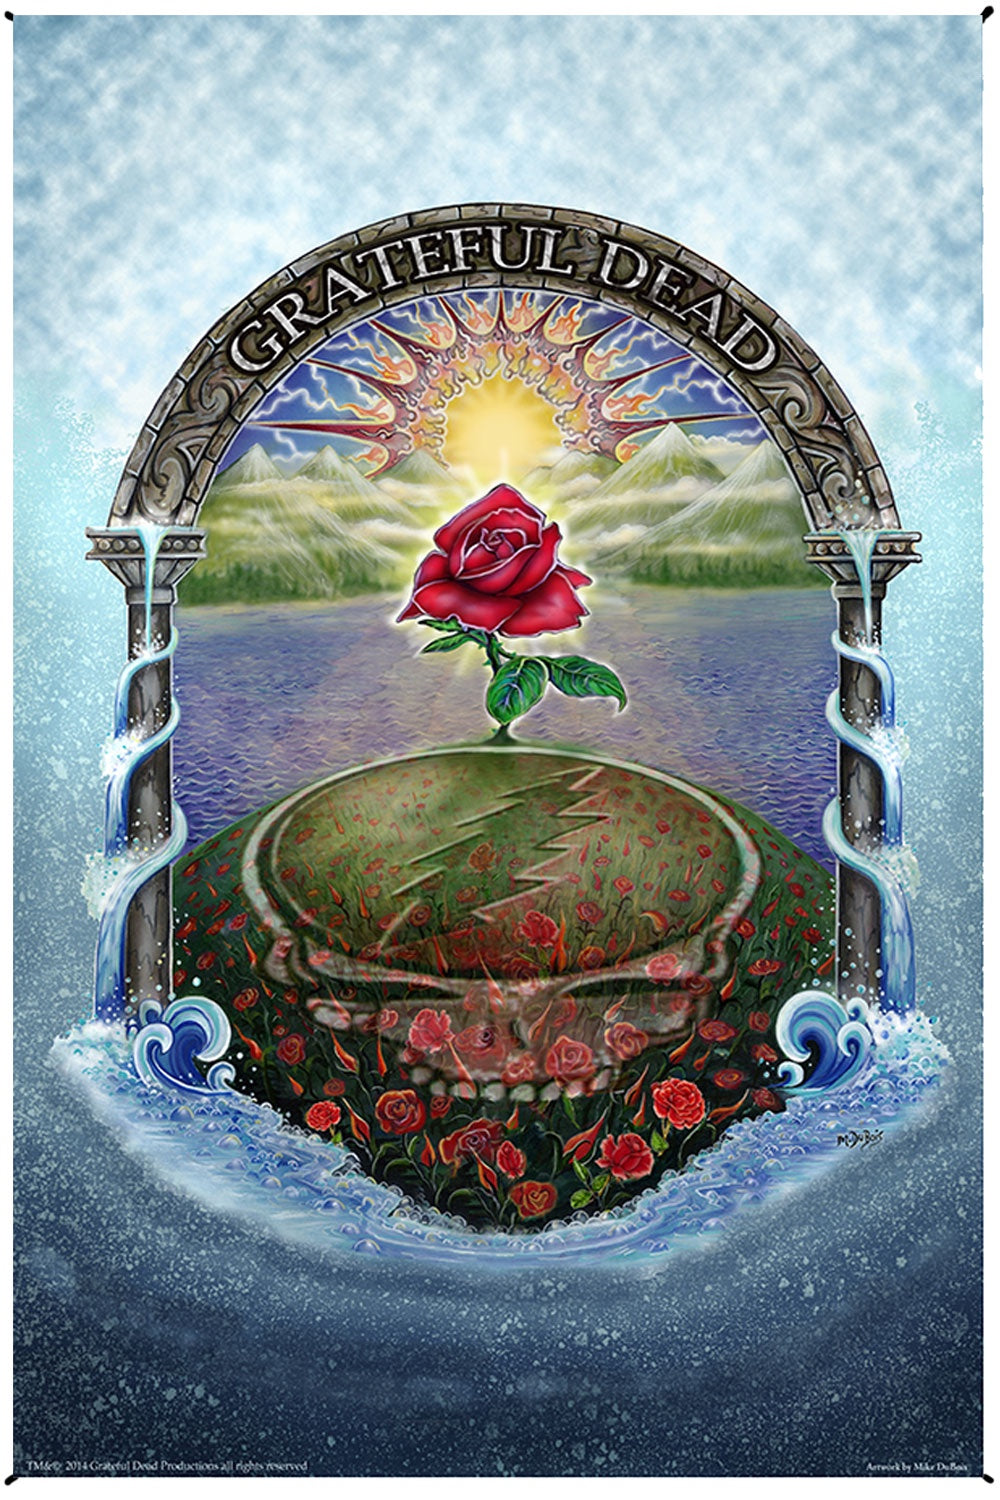 Sunshine Joy - Grateful Dead Rose Garden Heady Art Print Tapestry 53x85